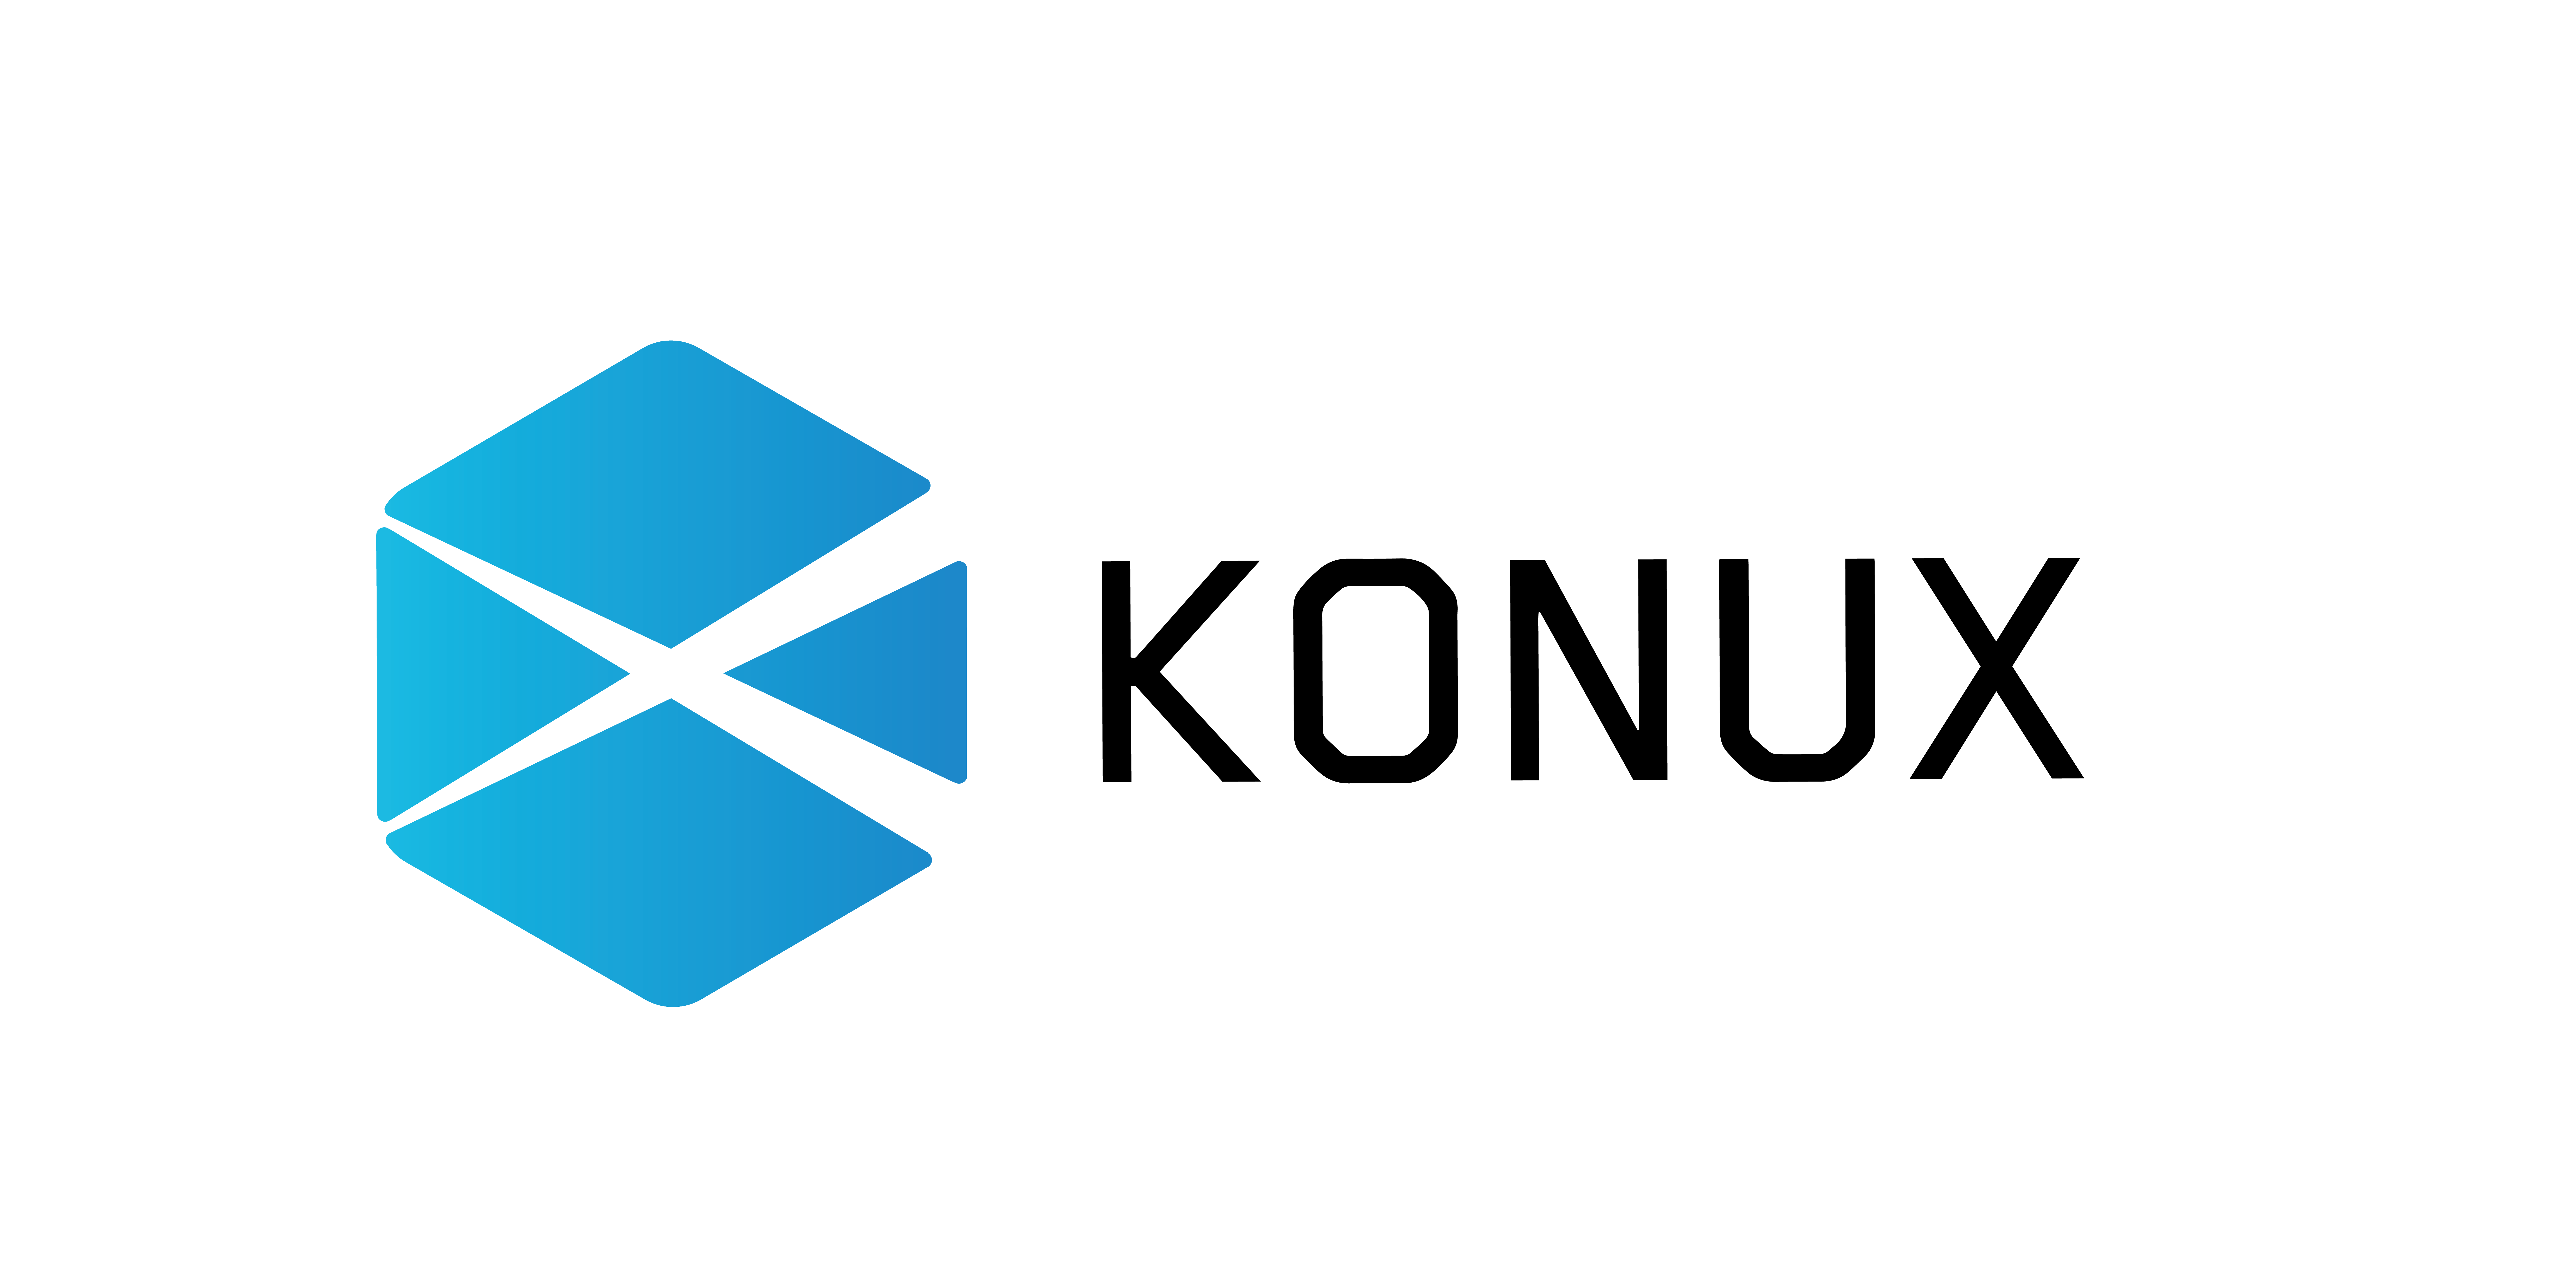 High Resolution Company Logo - KONUX Press Resources, Logos and Photo Materials